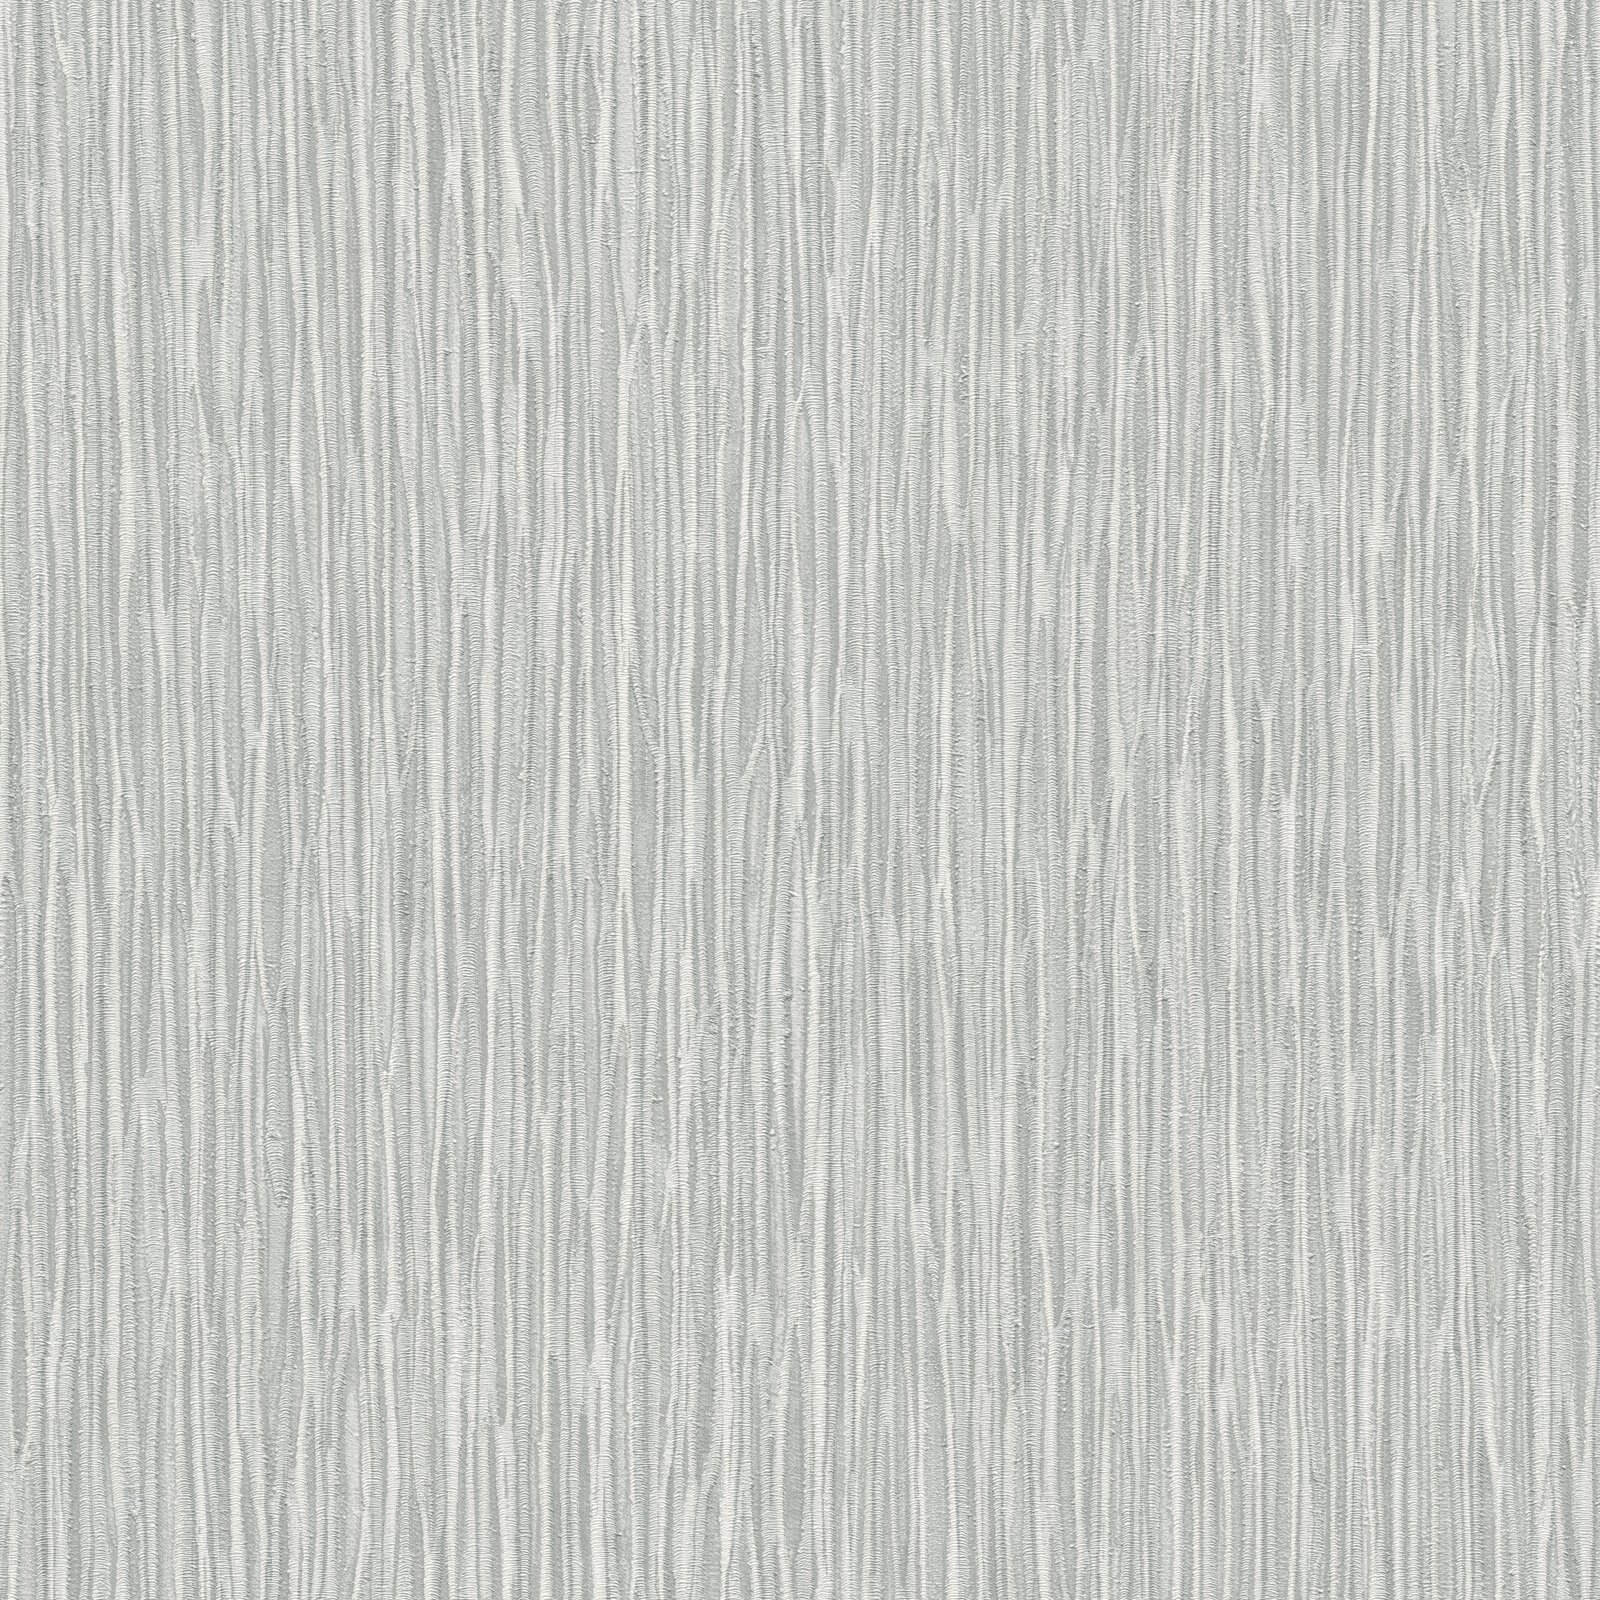 Belgravia Decor Livenza Plain Embossed Metallic Silver Wallpaper